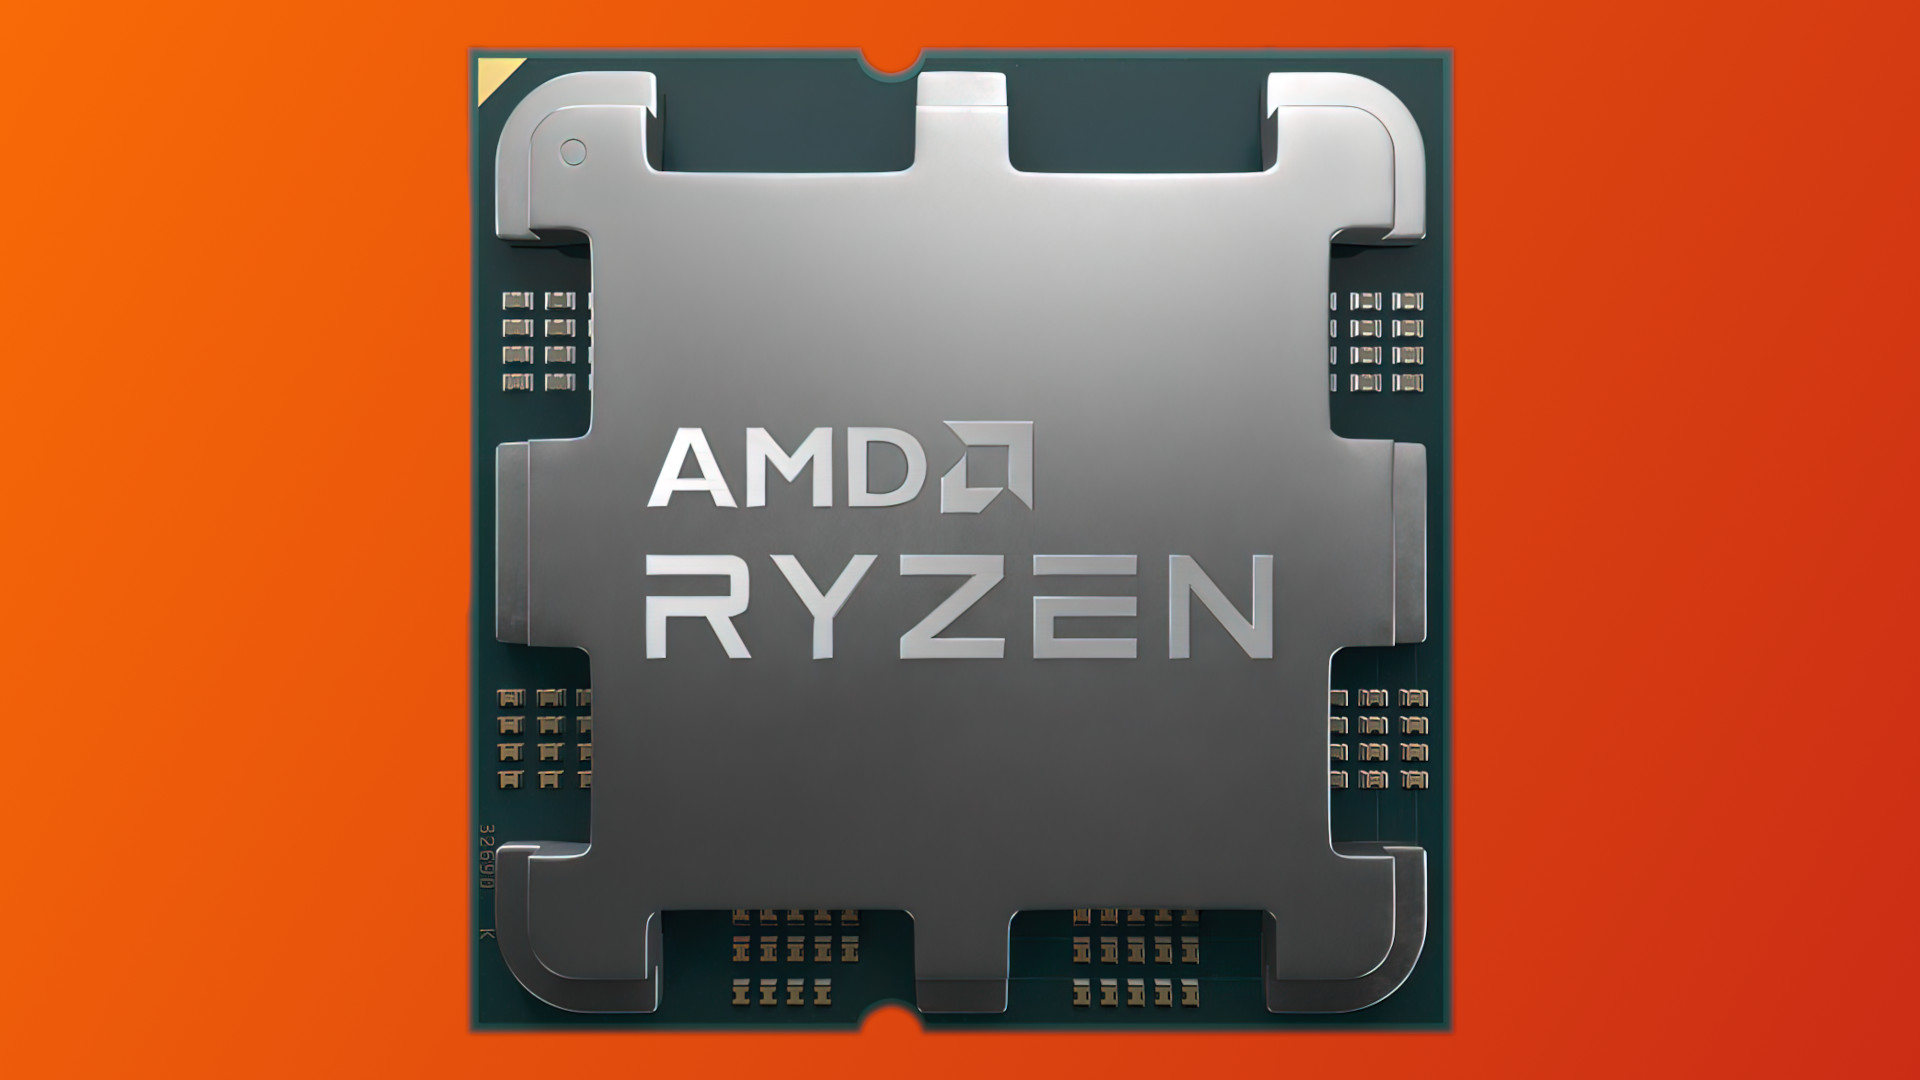 AMD Ryzen 7000 launch allegedly delayed by BIOS issues